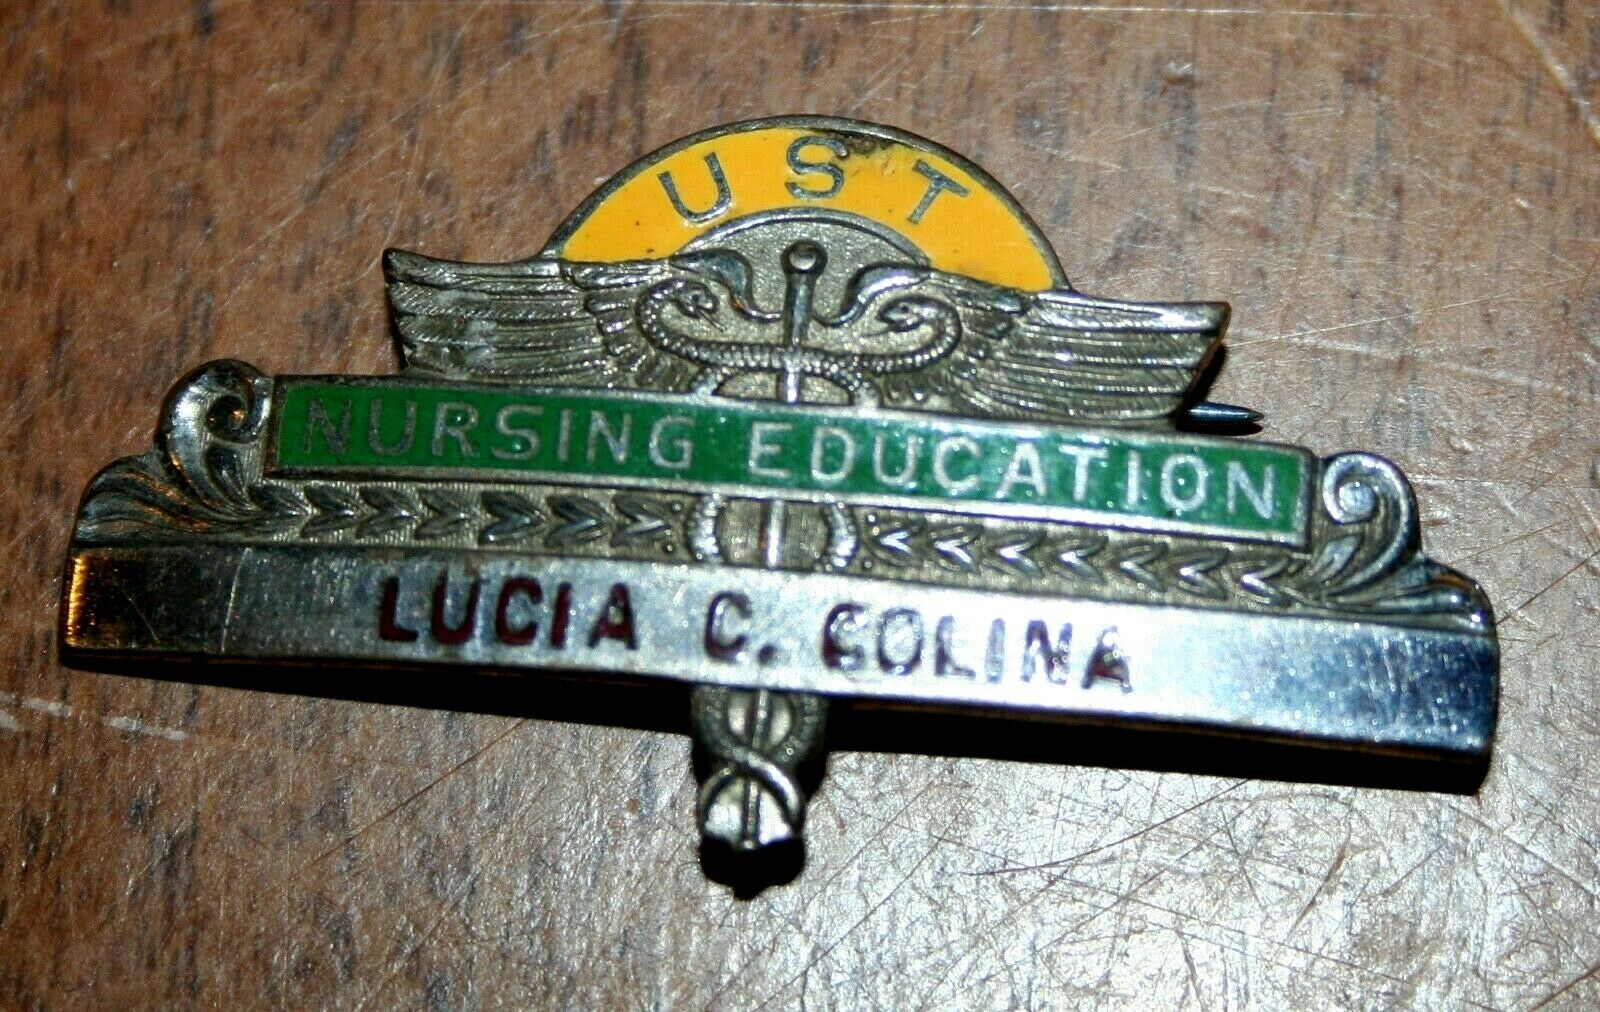 Vtg Ust Nursing Education Pin Brooch Name Tag  "lucia C. Colina" Medical Pin